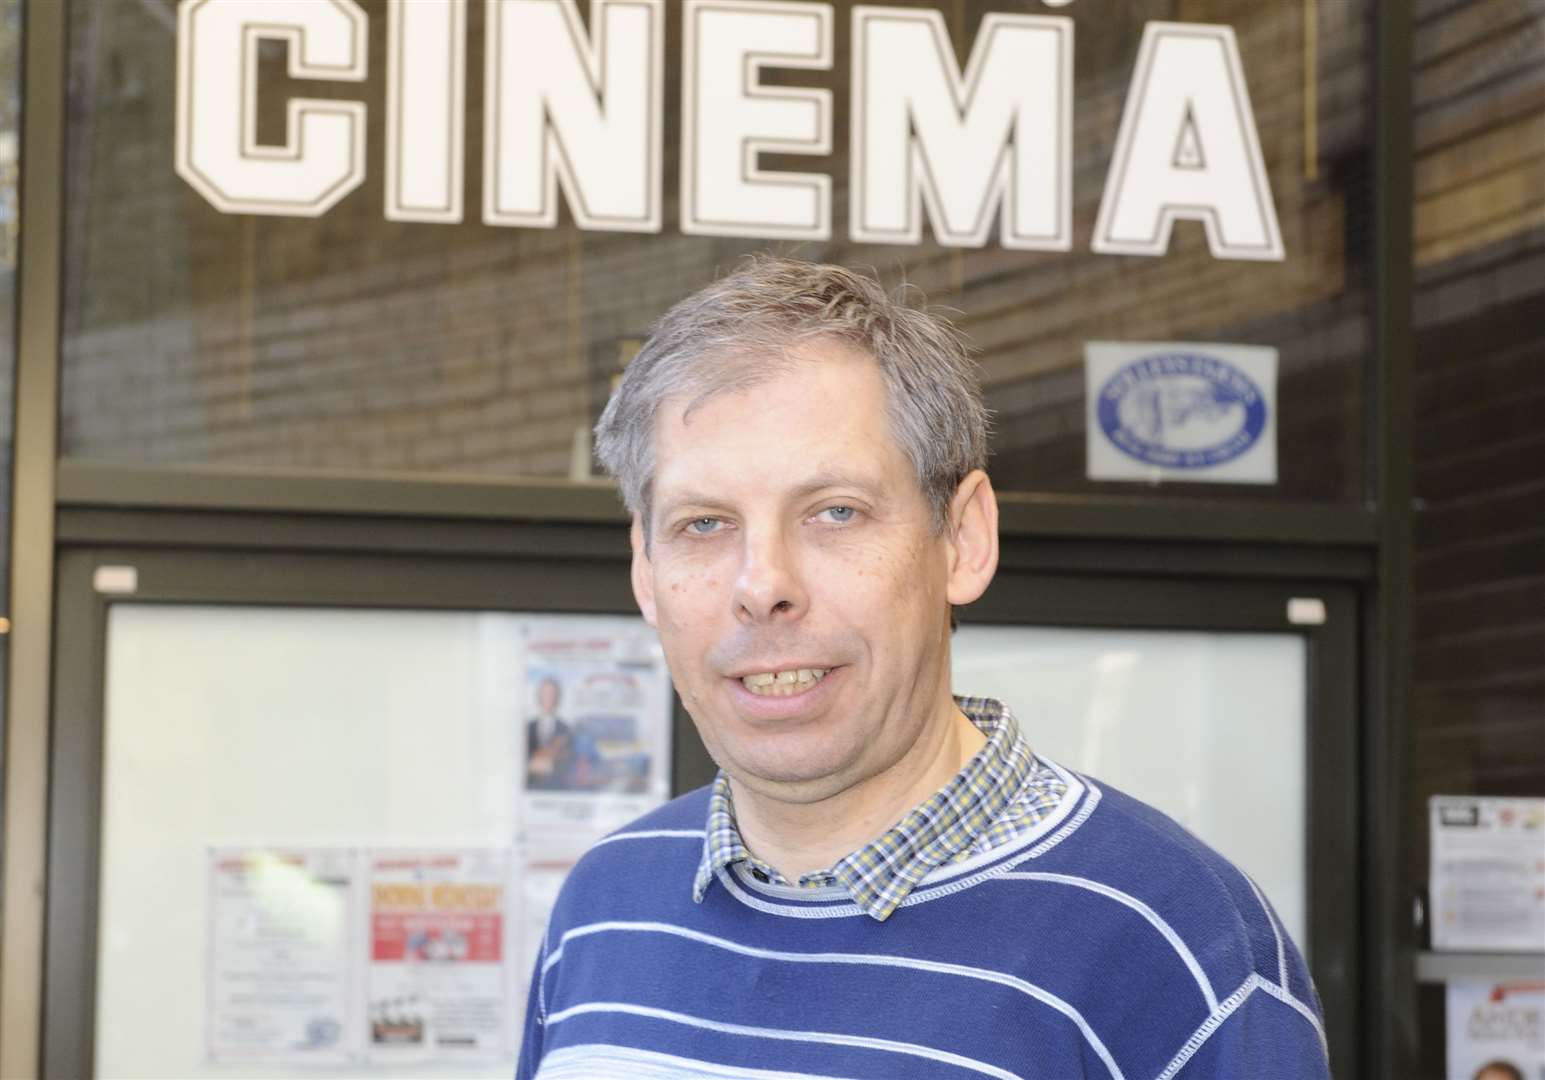 Robert Johnson, owner of the Kavanagh Cinema in Herne Bay